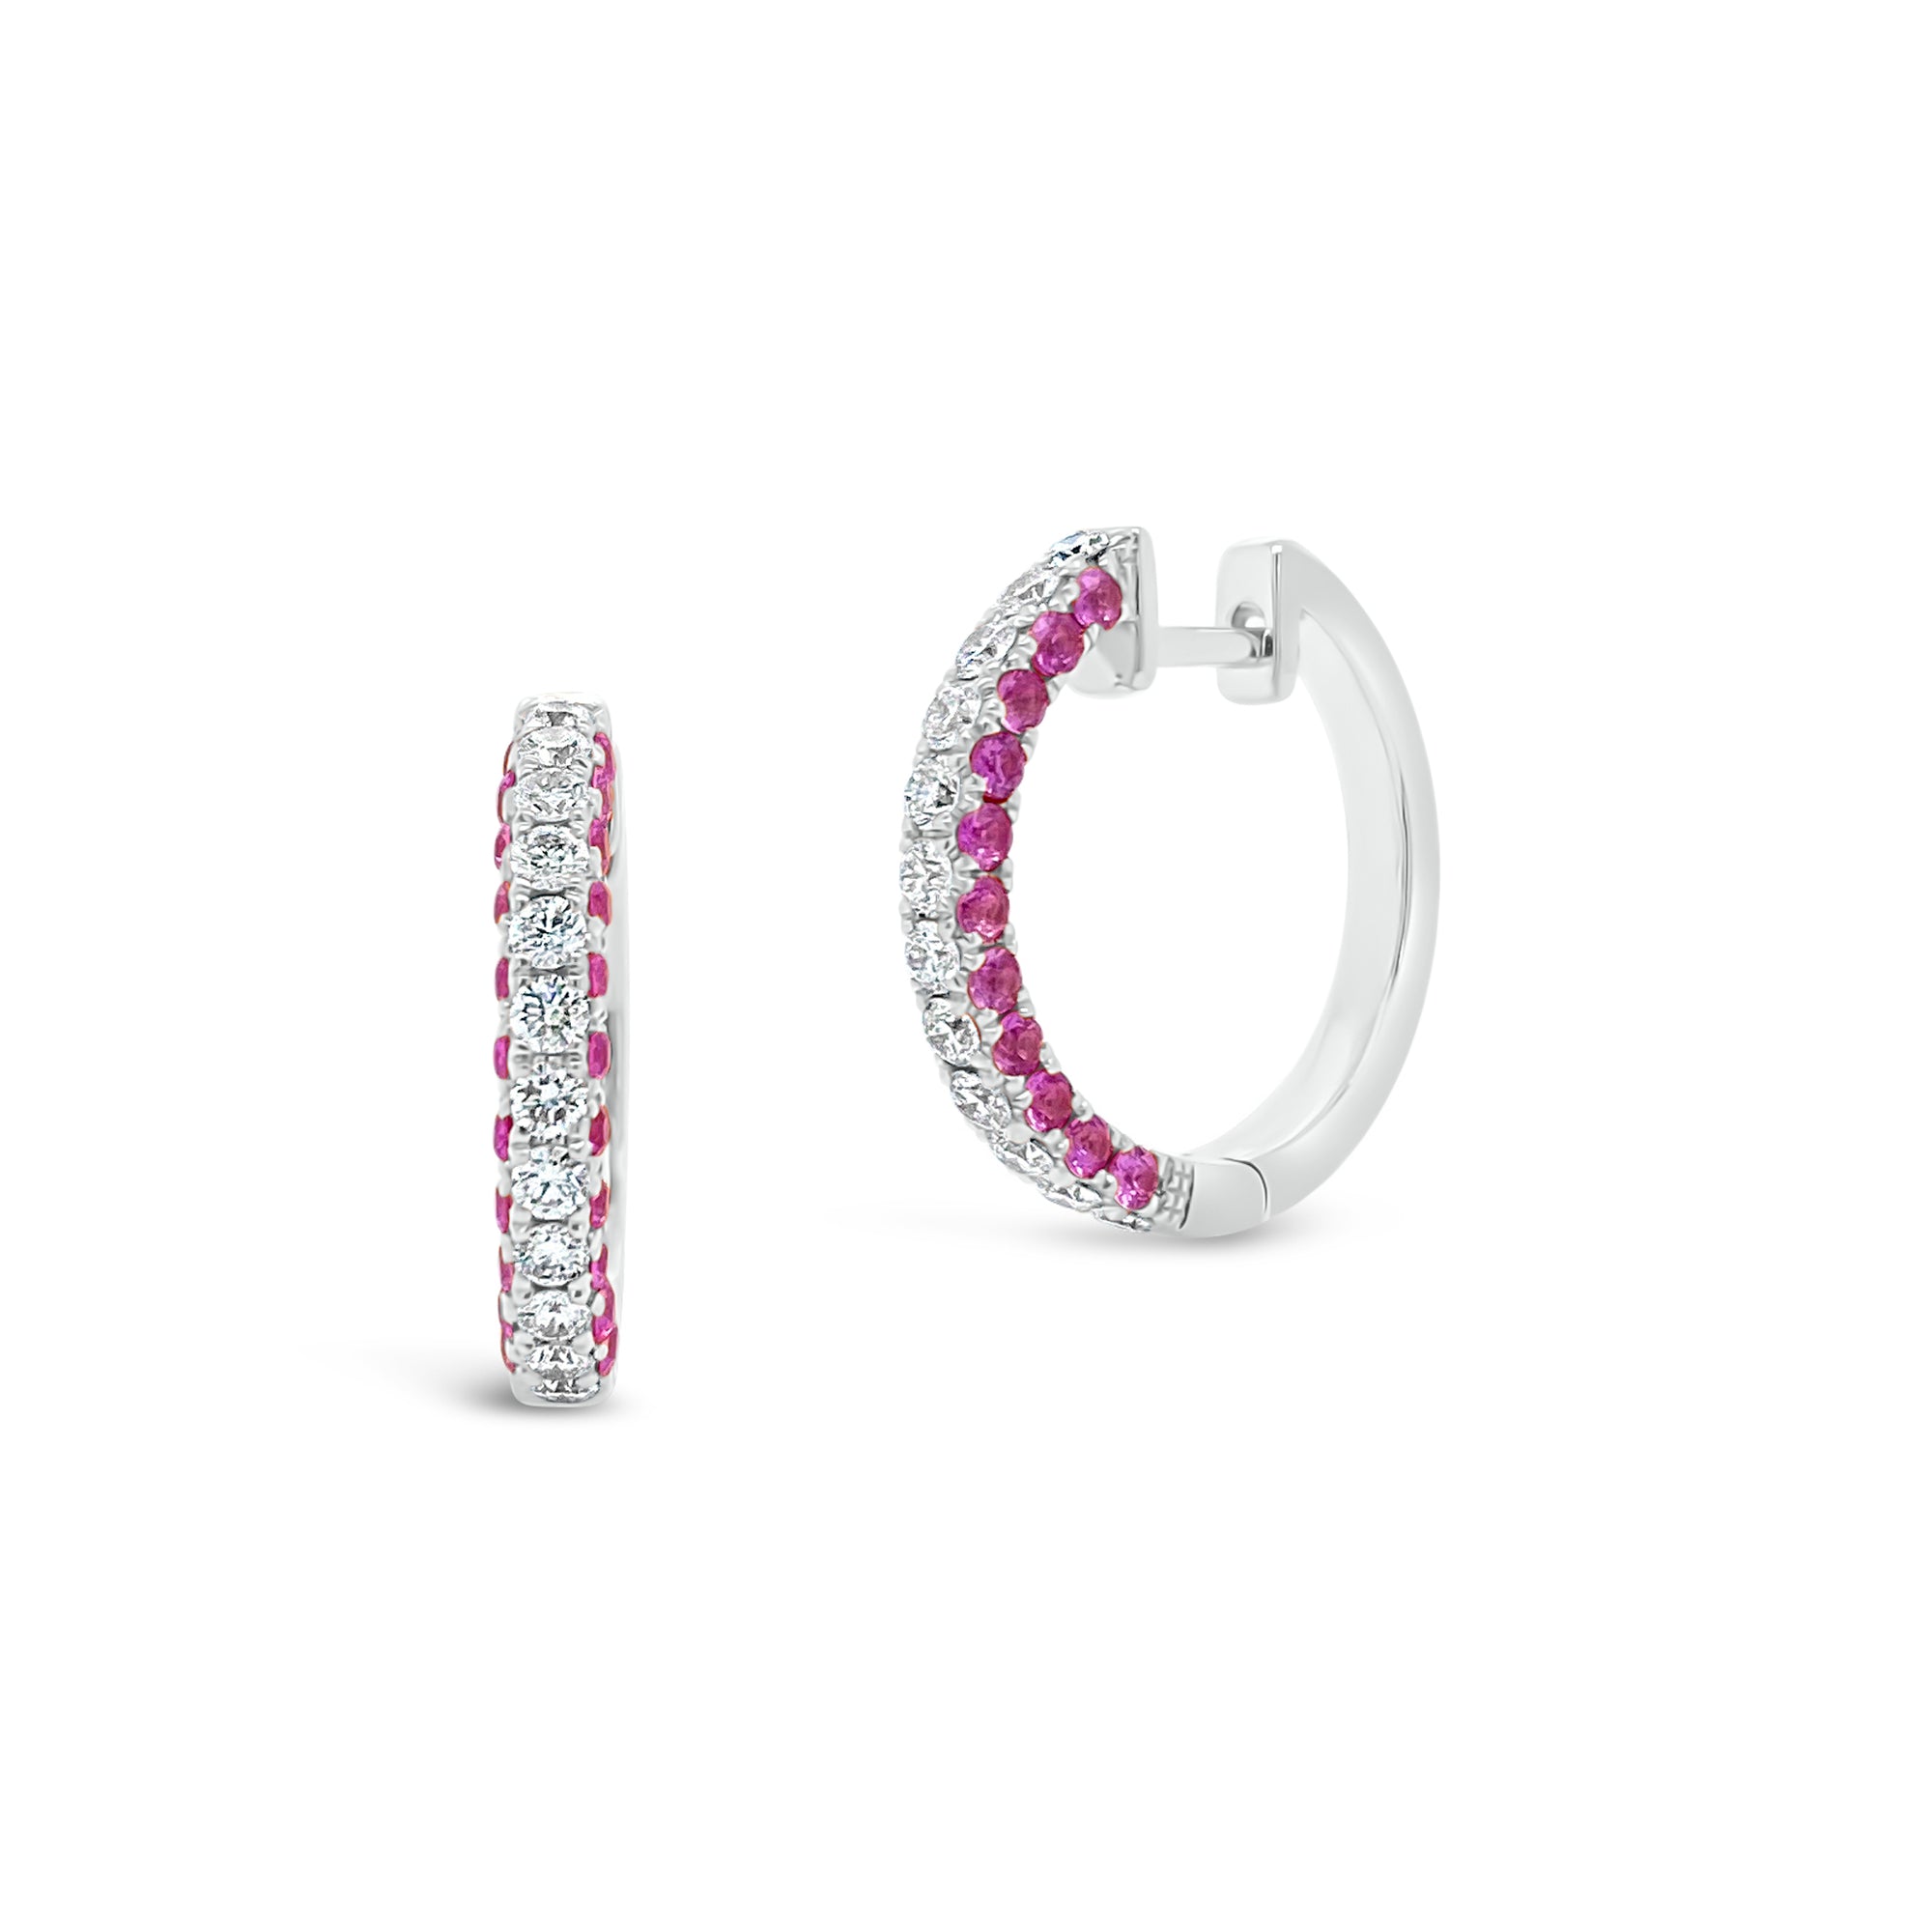 Diamond & pink sapphire huggie earrings -14K gold weighing 4.34 grams  -24 round diamonds totaling 0.61 carats  -44 pink sapphires totaling 0.93 carats